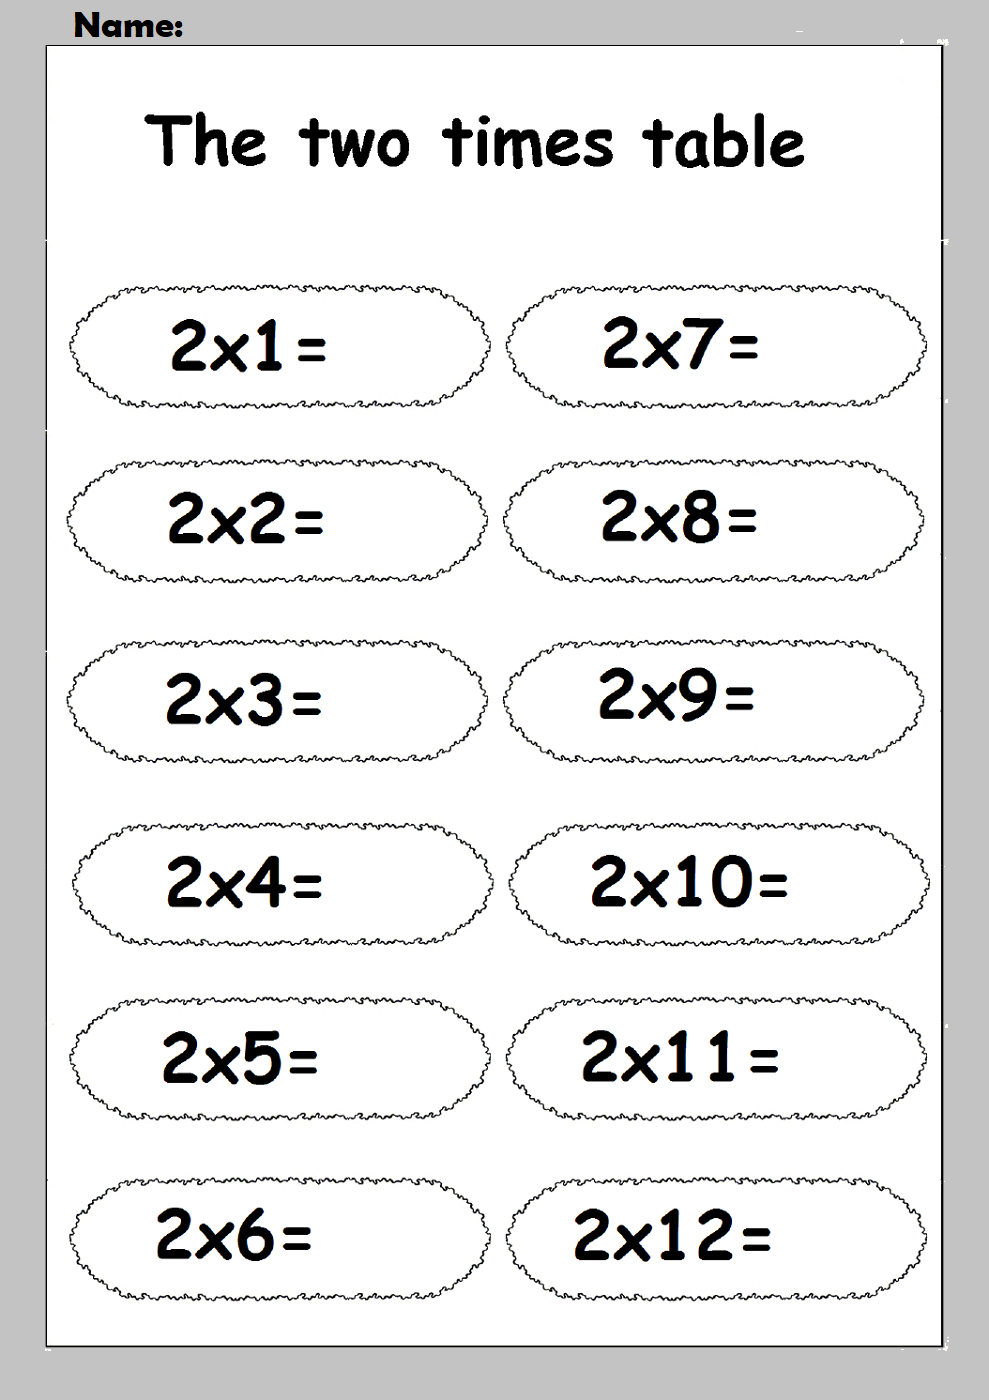 Printable Multiplication Table Of 2 PrintableMultiplication